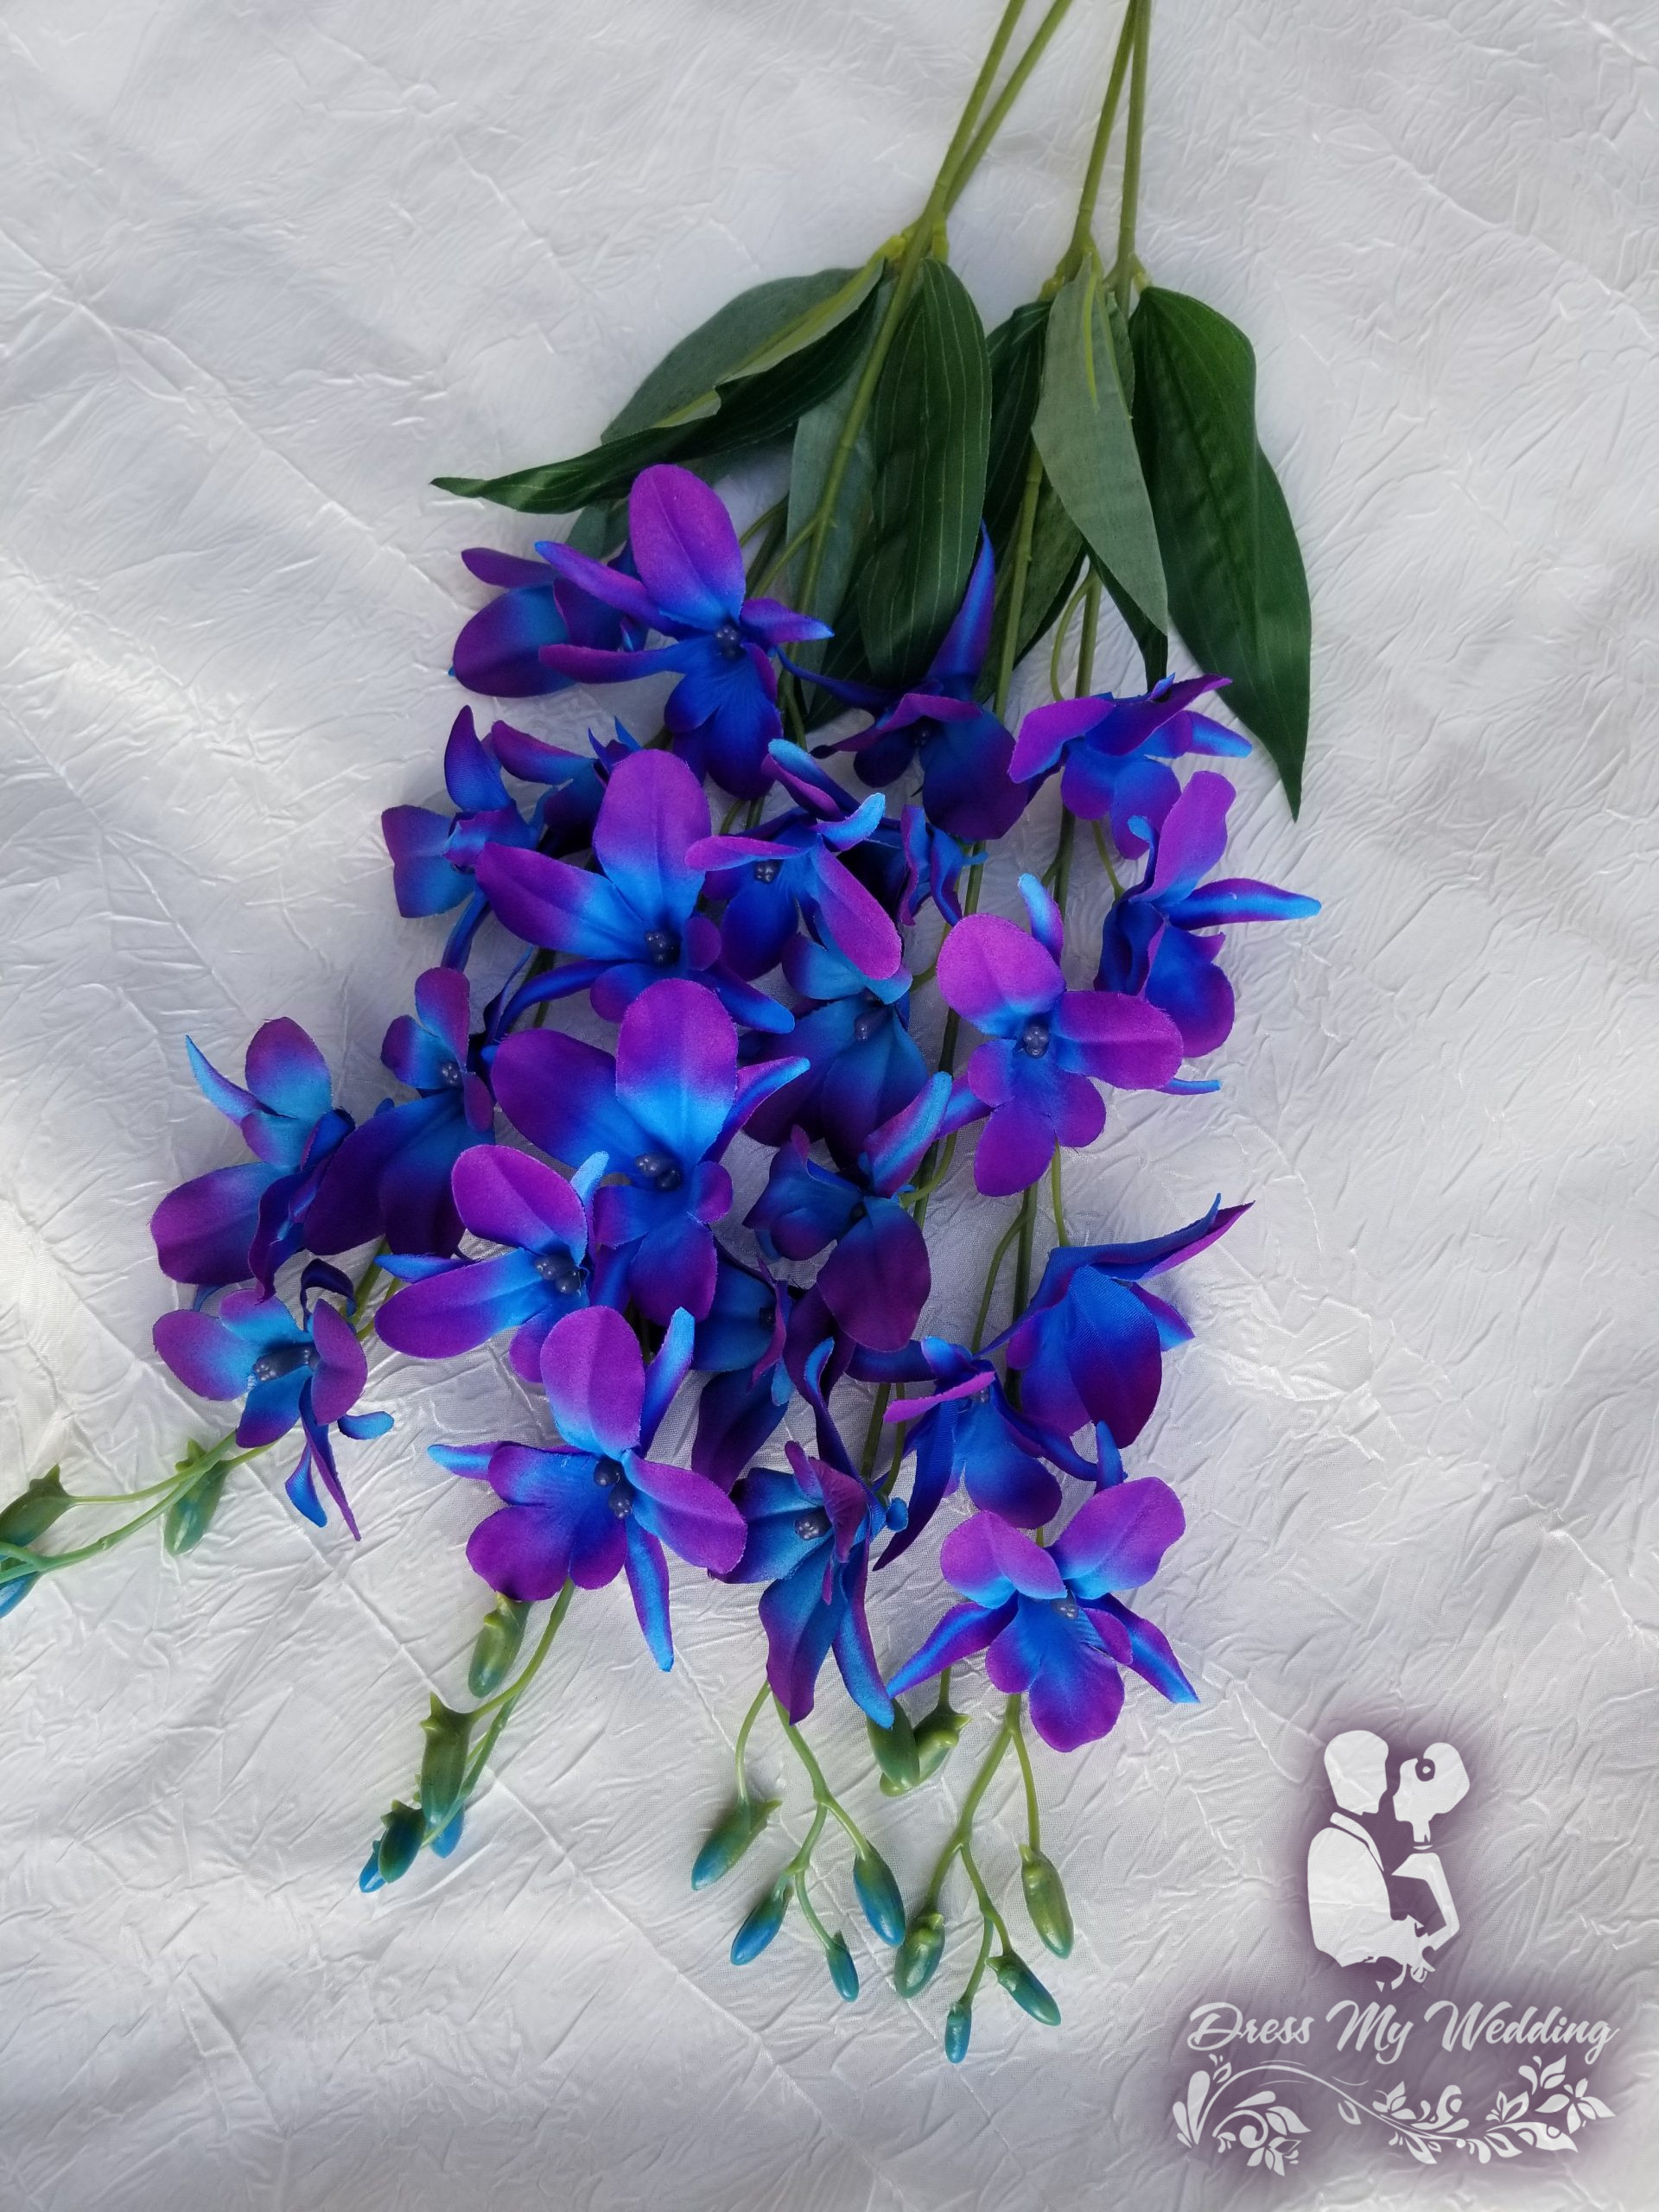 3x SiLK SINGAPORE GALAXY BLUE PURPLE ORCHID DENDROBIUM ORCHIDS FLOWER STEM 